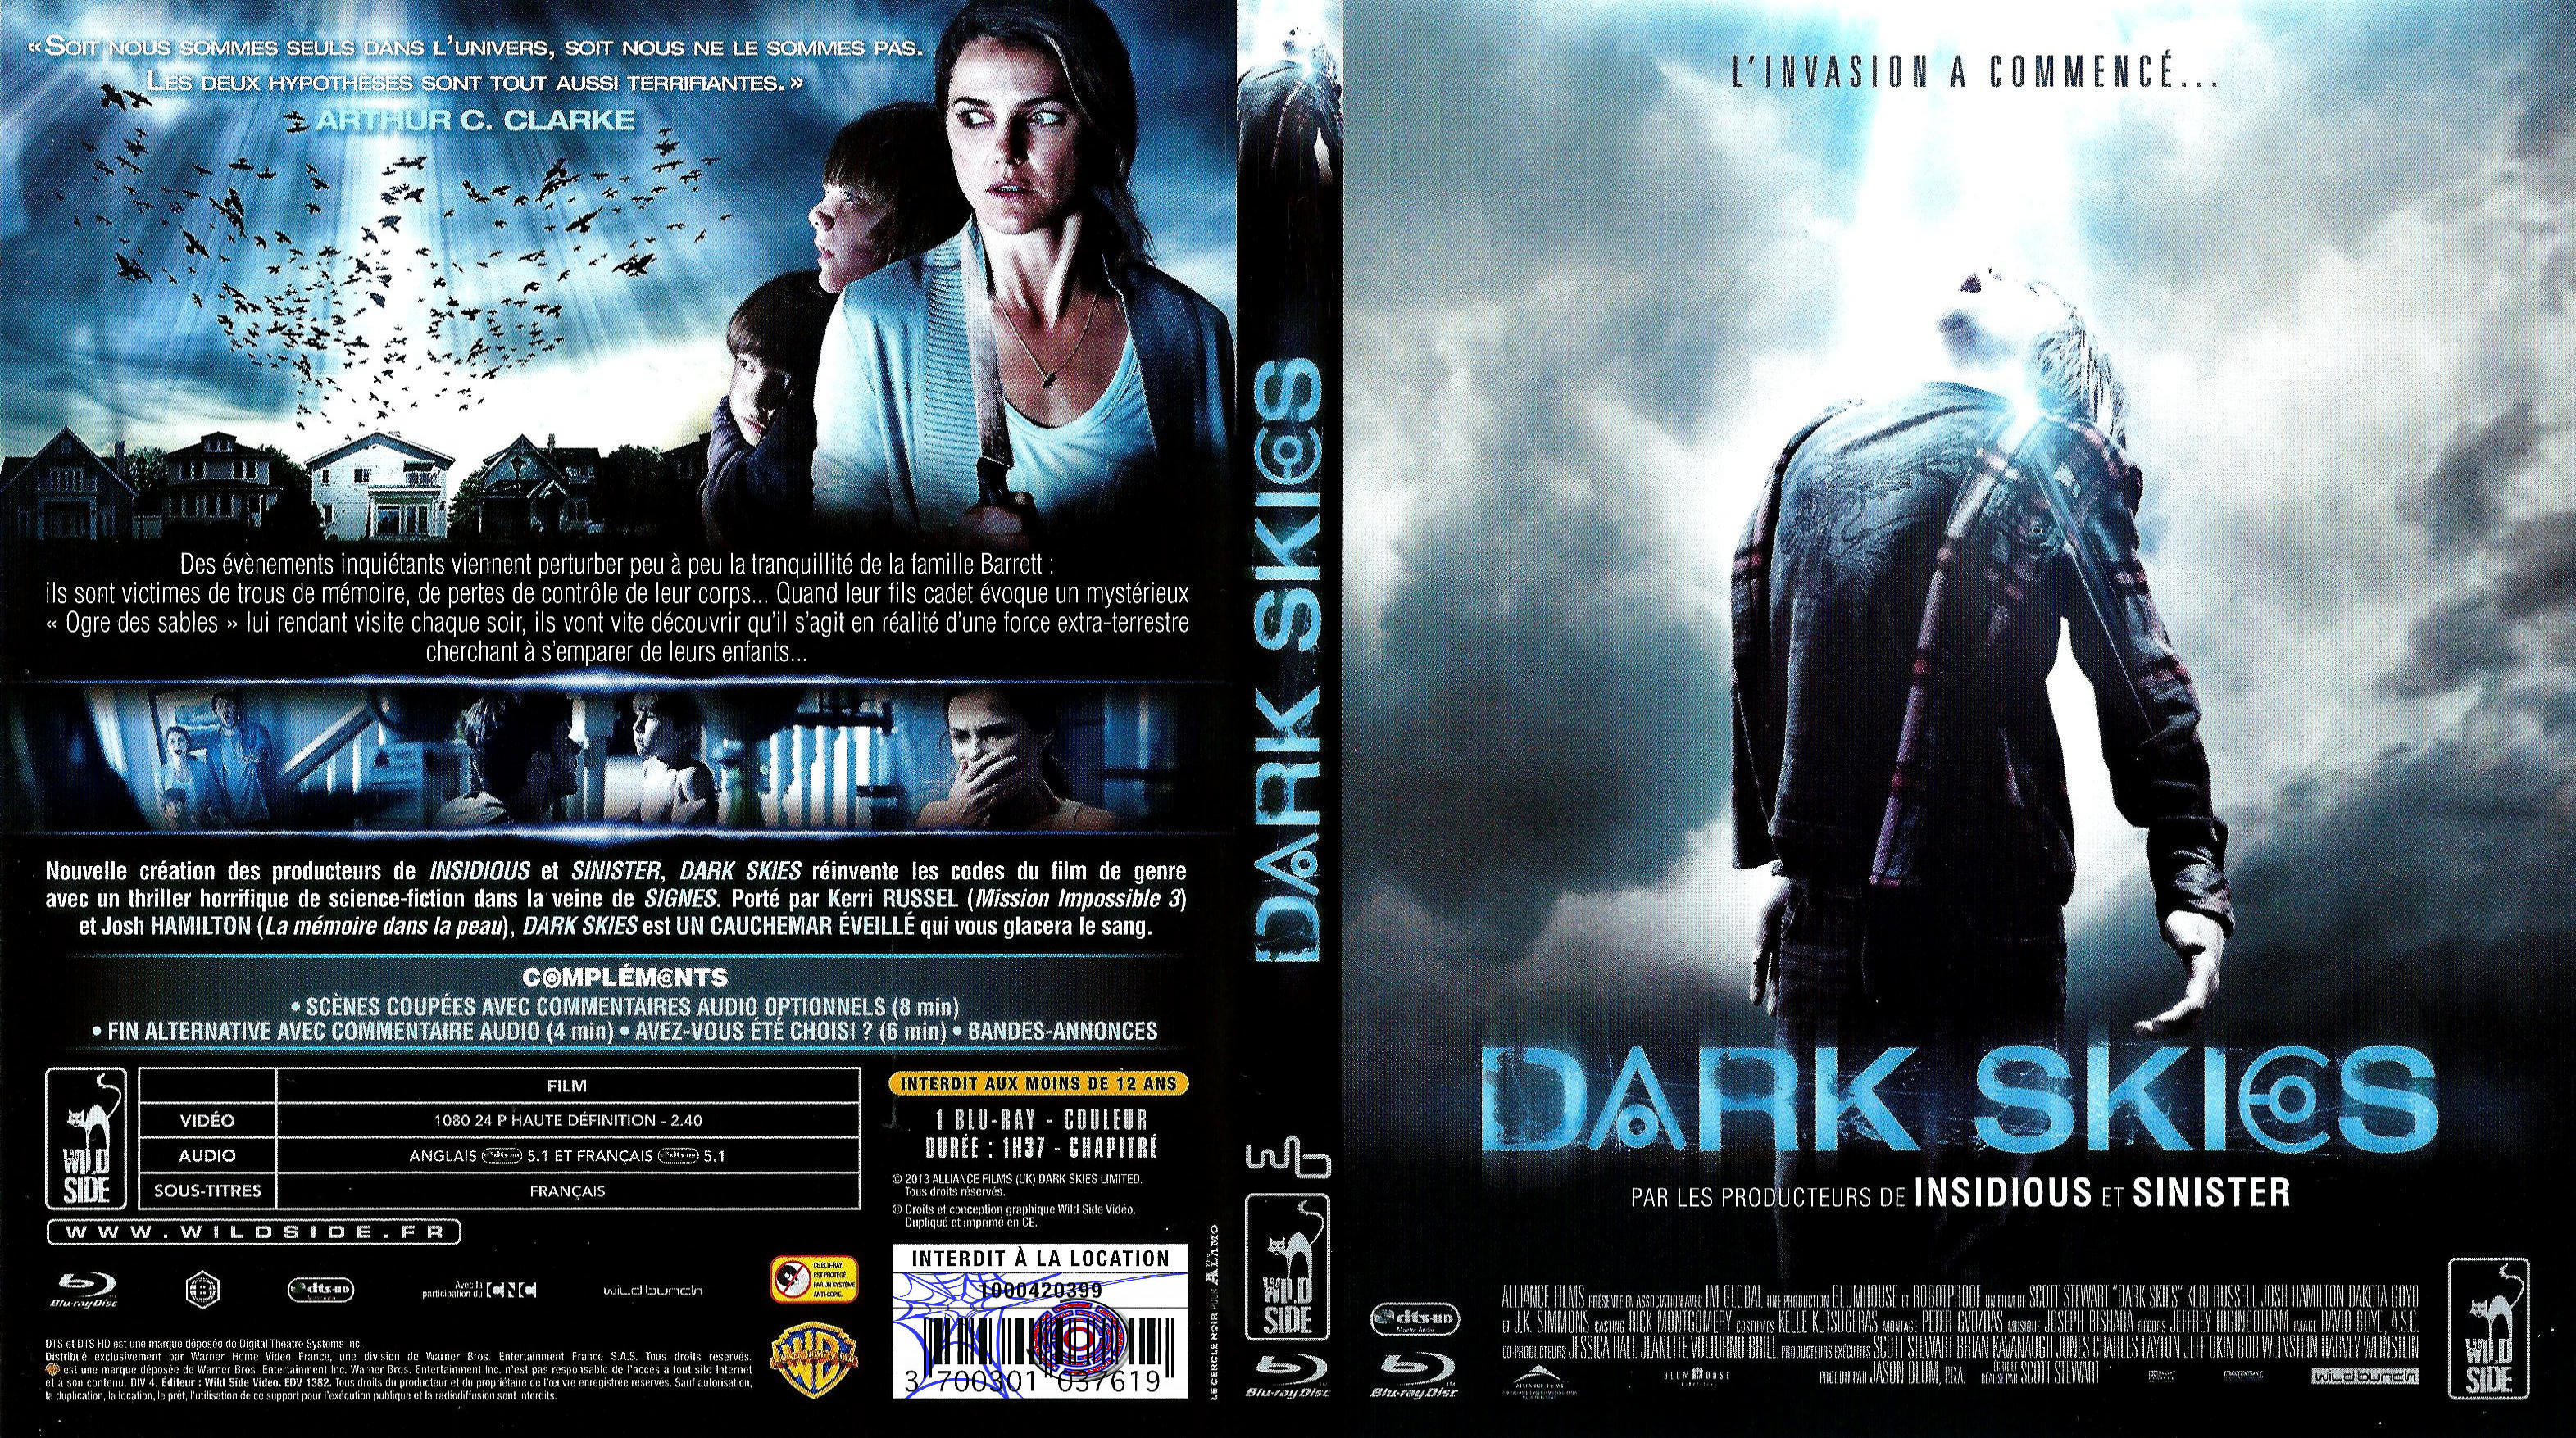 Jaquette DVD Dark skies (BLU-RAY)